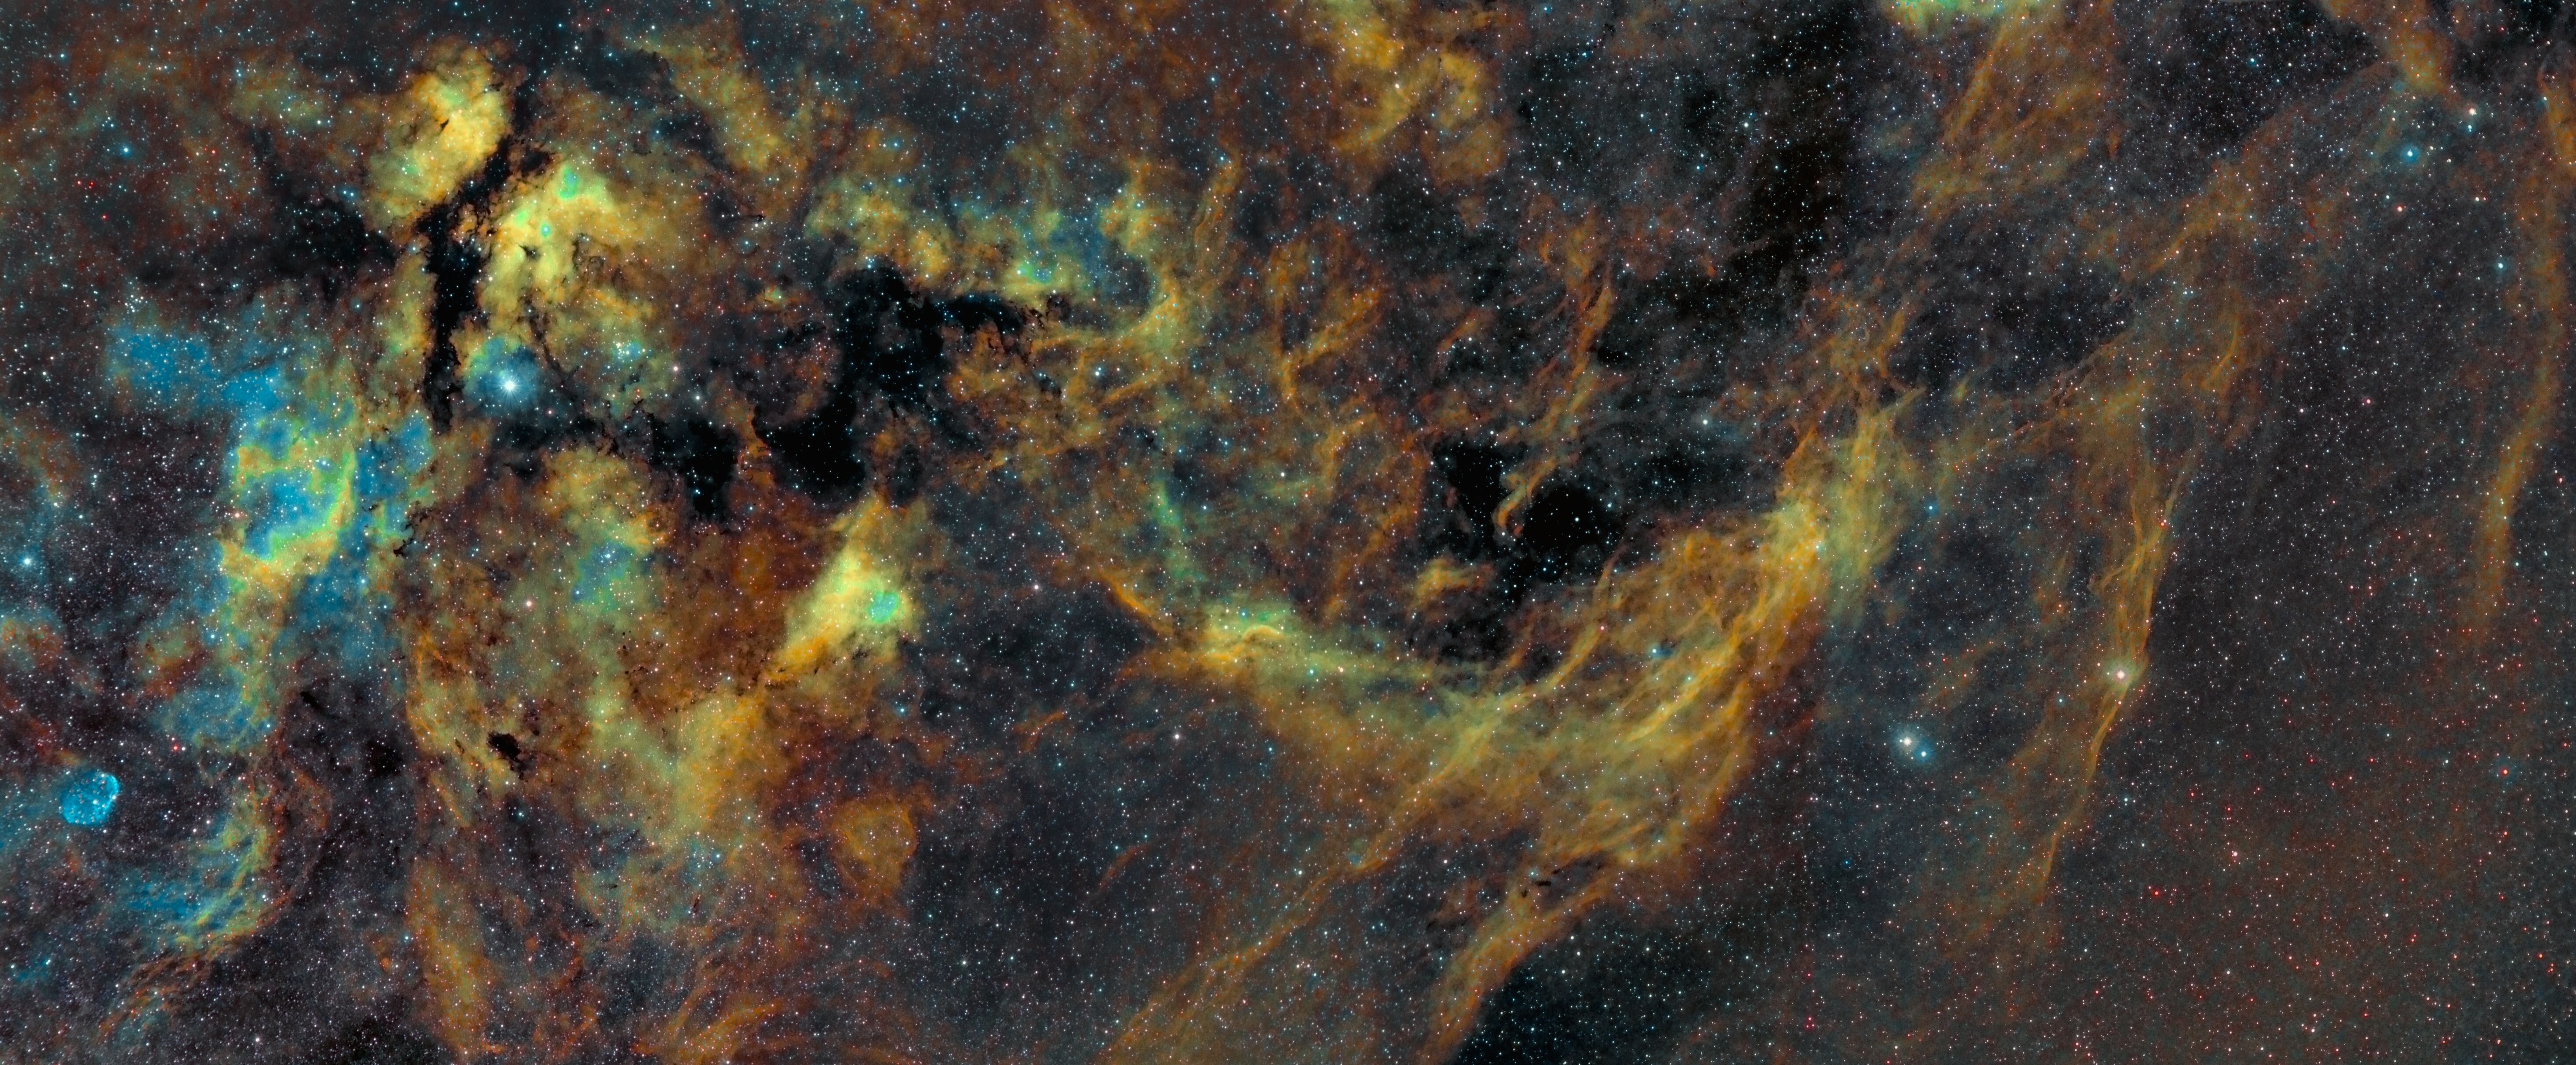 Sadr Area Nebula Mosaic in Hubble Palette